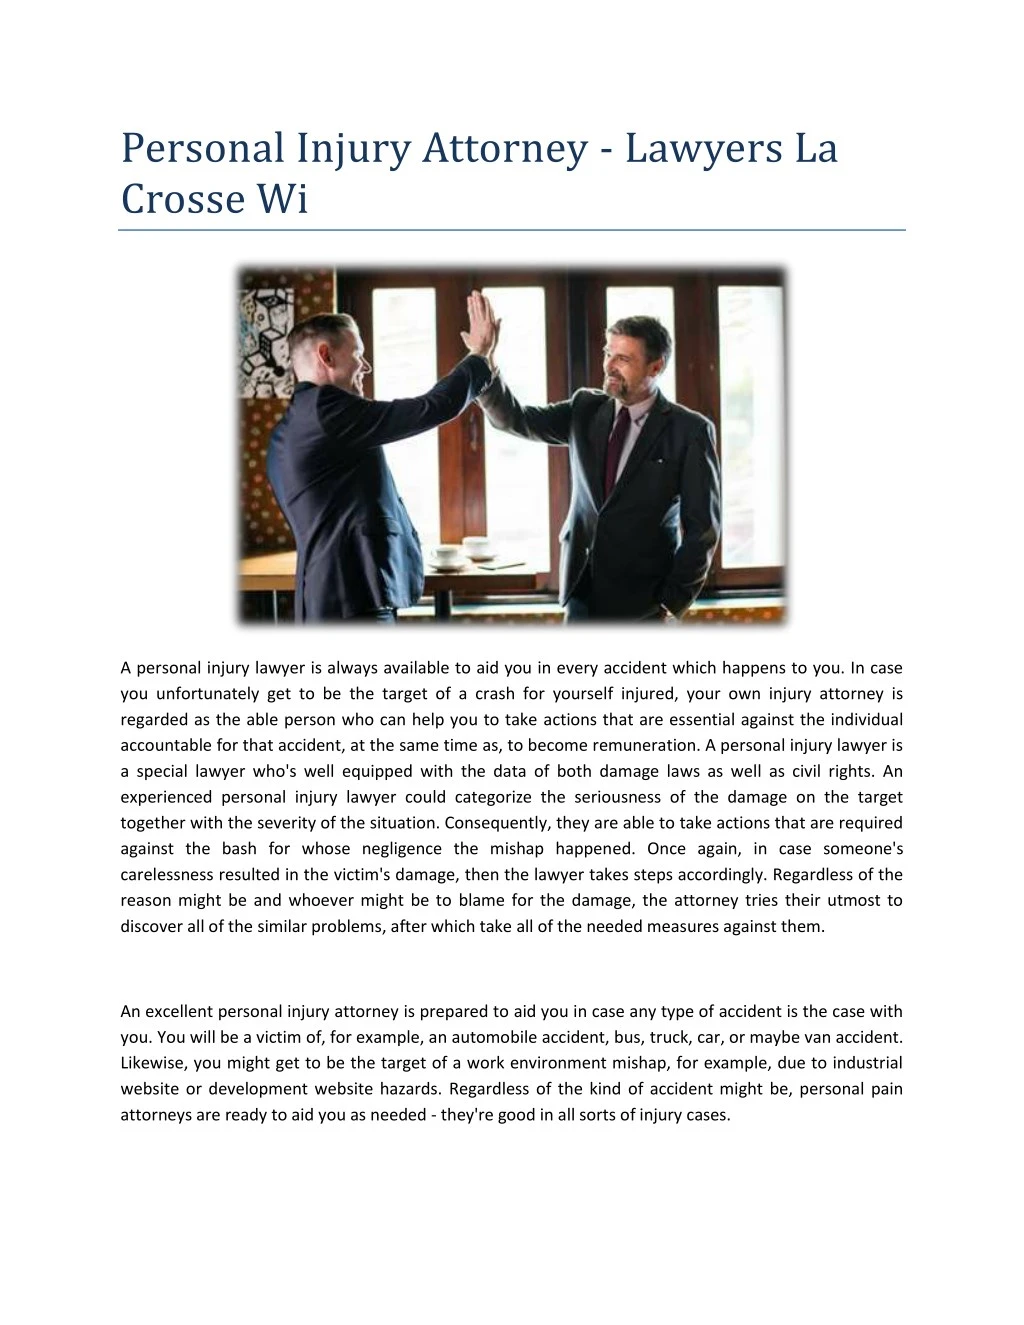 personal injury attorney lawyers la crosse wi